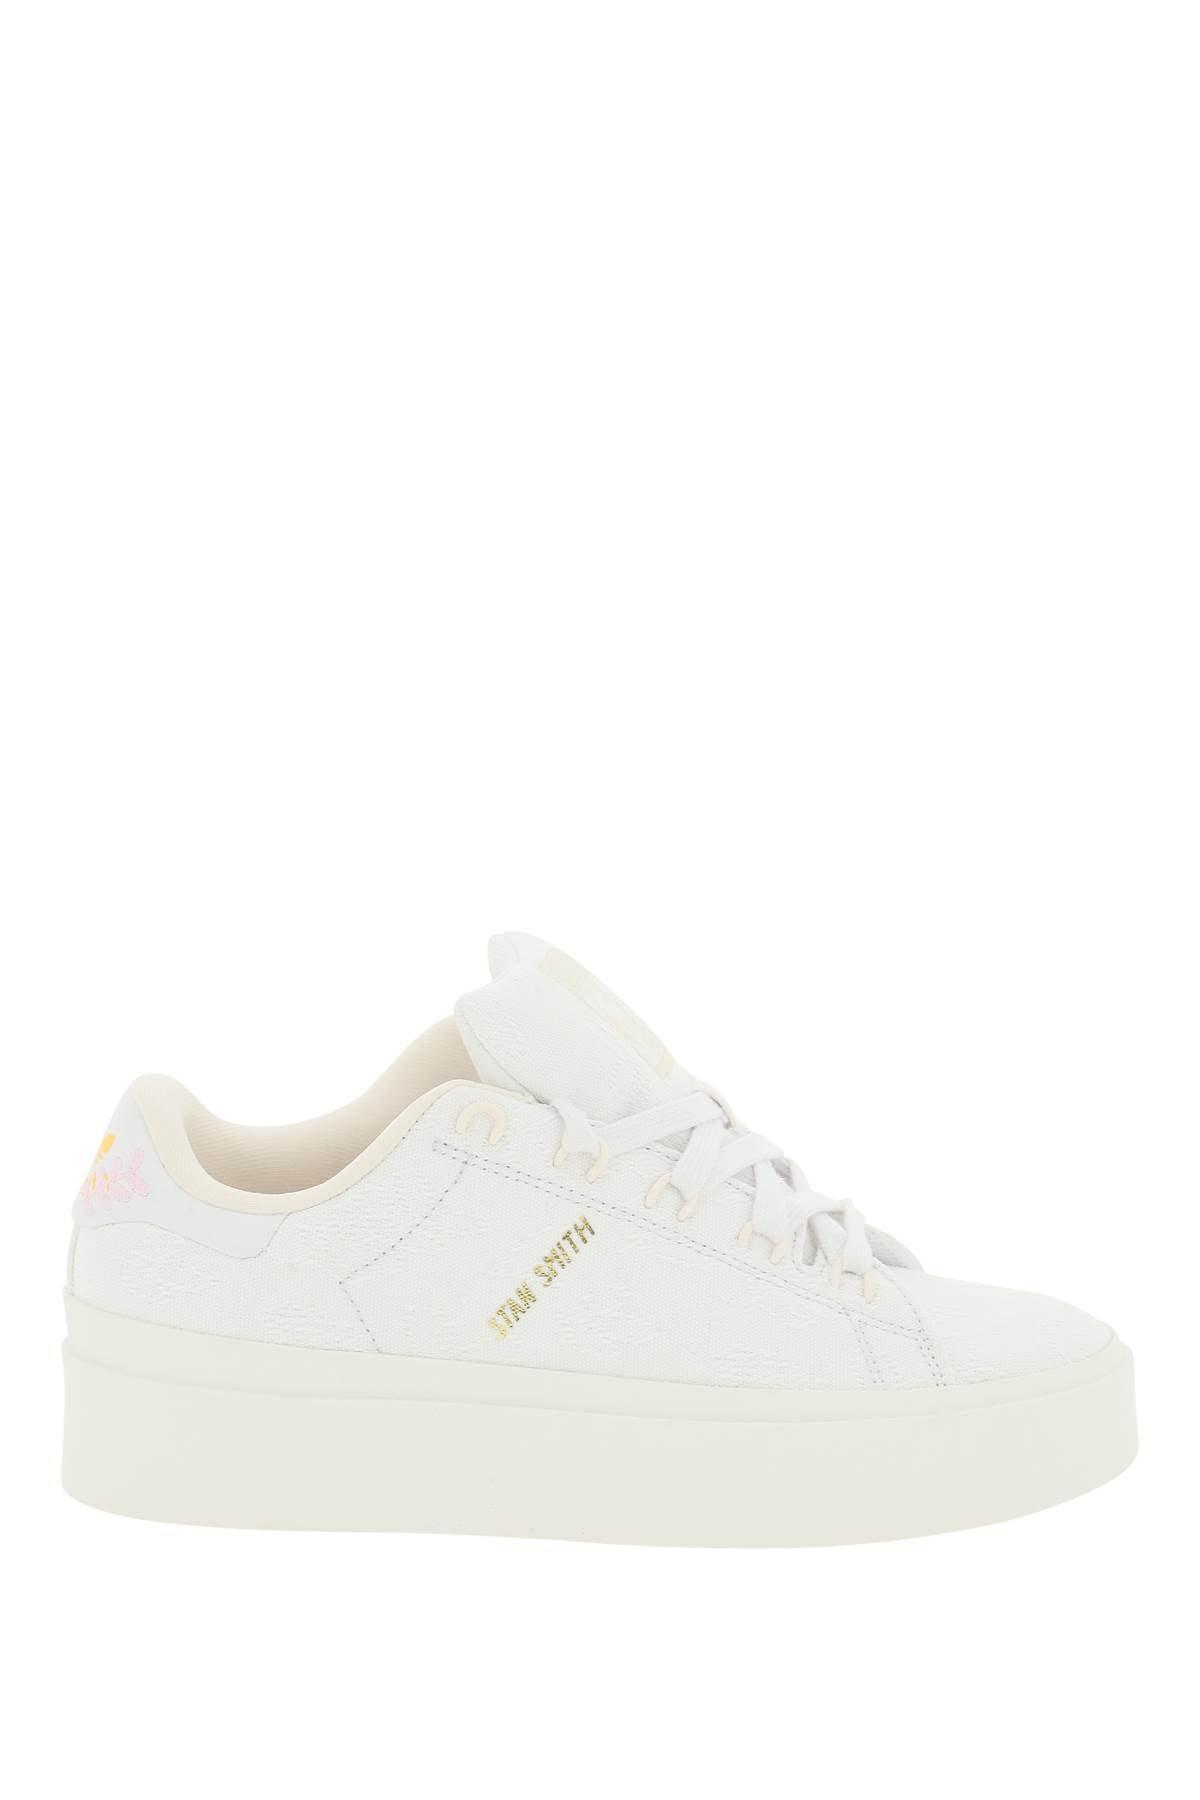 adidas Originals Stan Smith Bonega Sneakers in White | Lyst